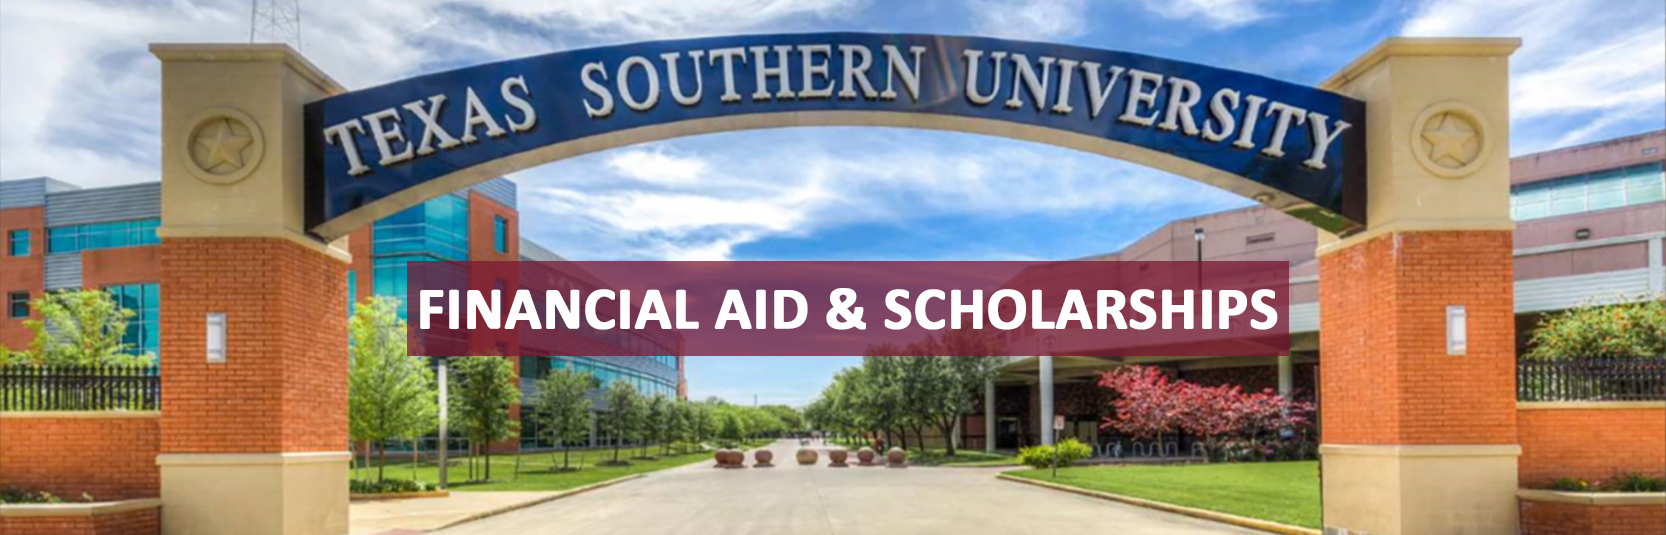 Financial aid & Scholarship Home slider